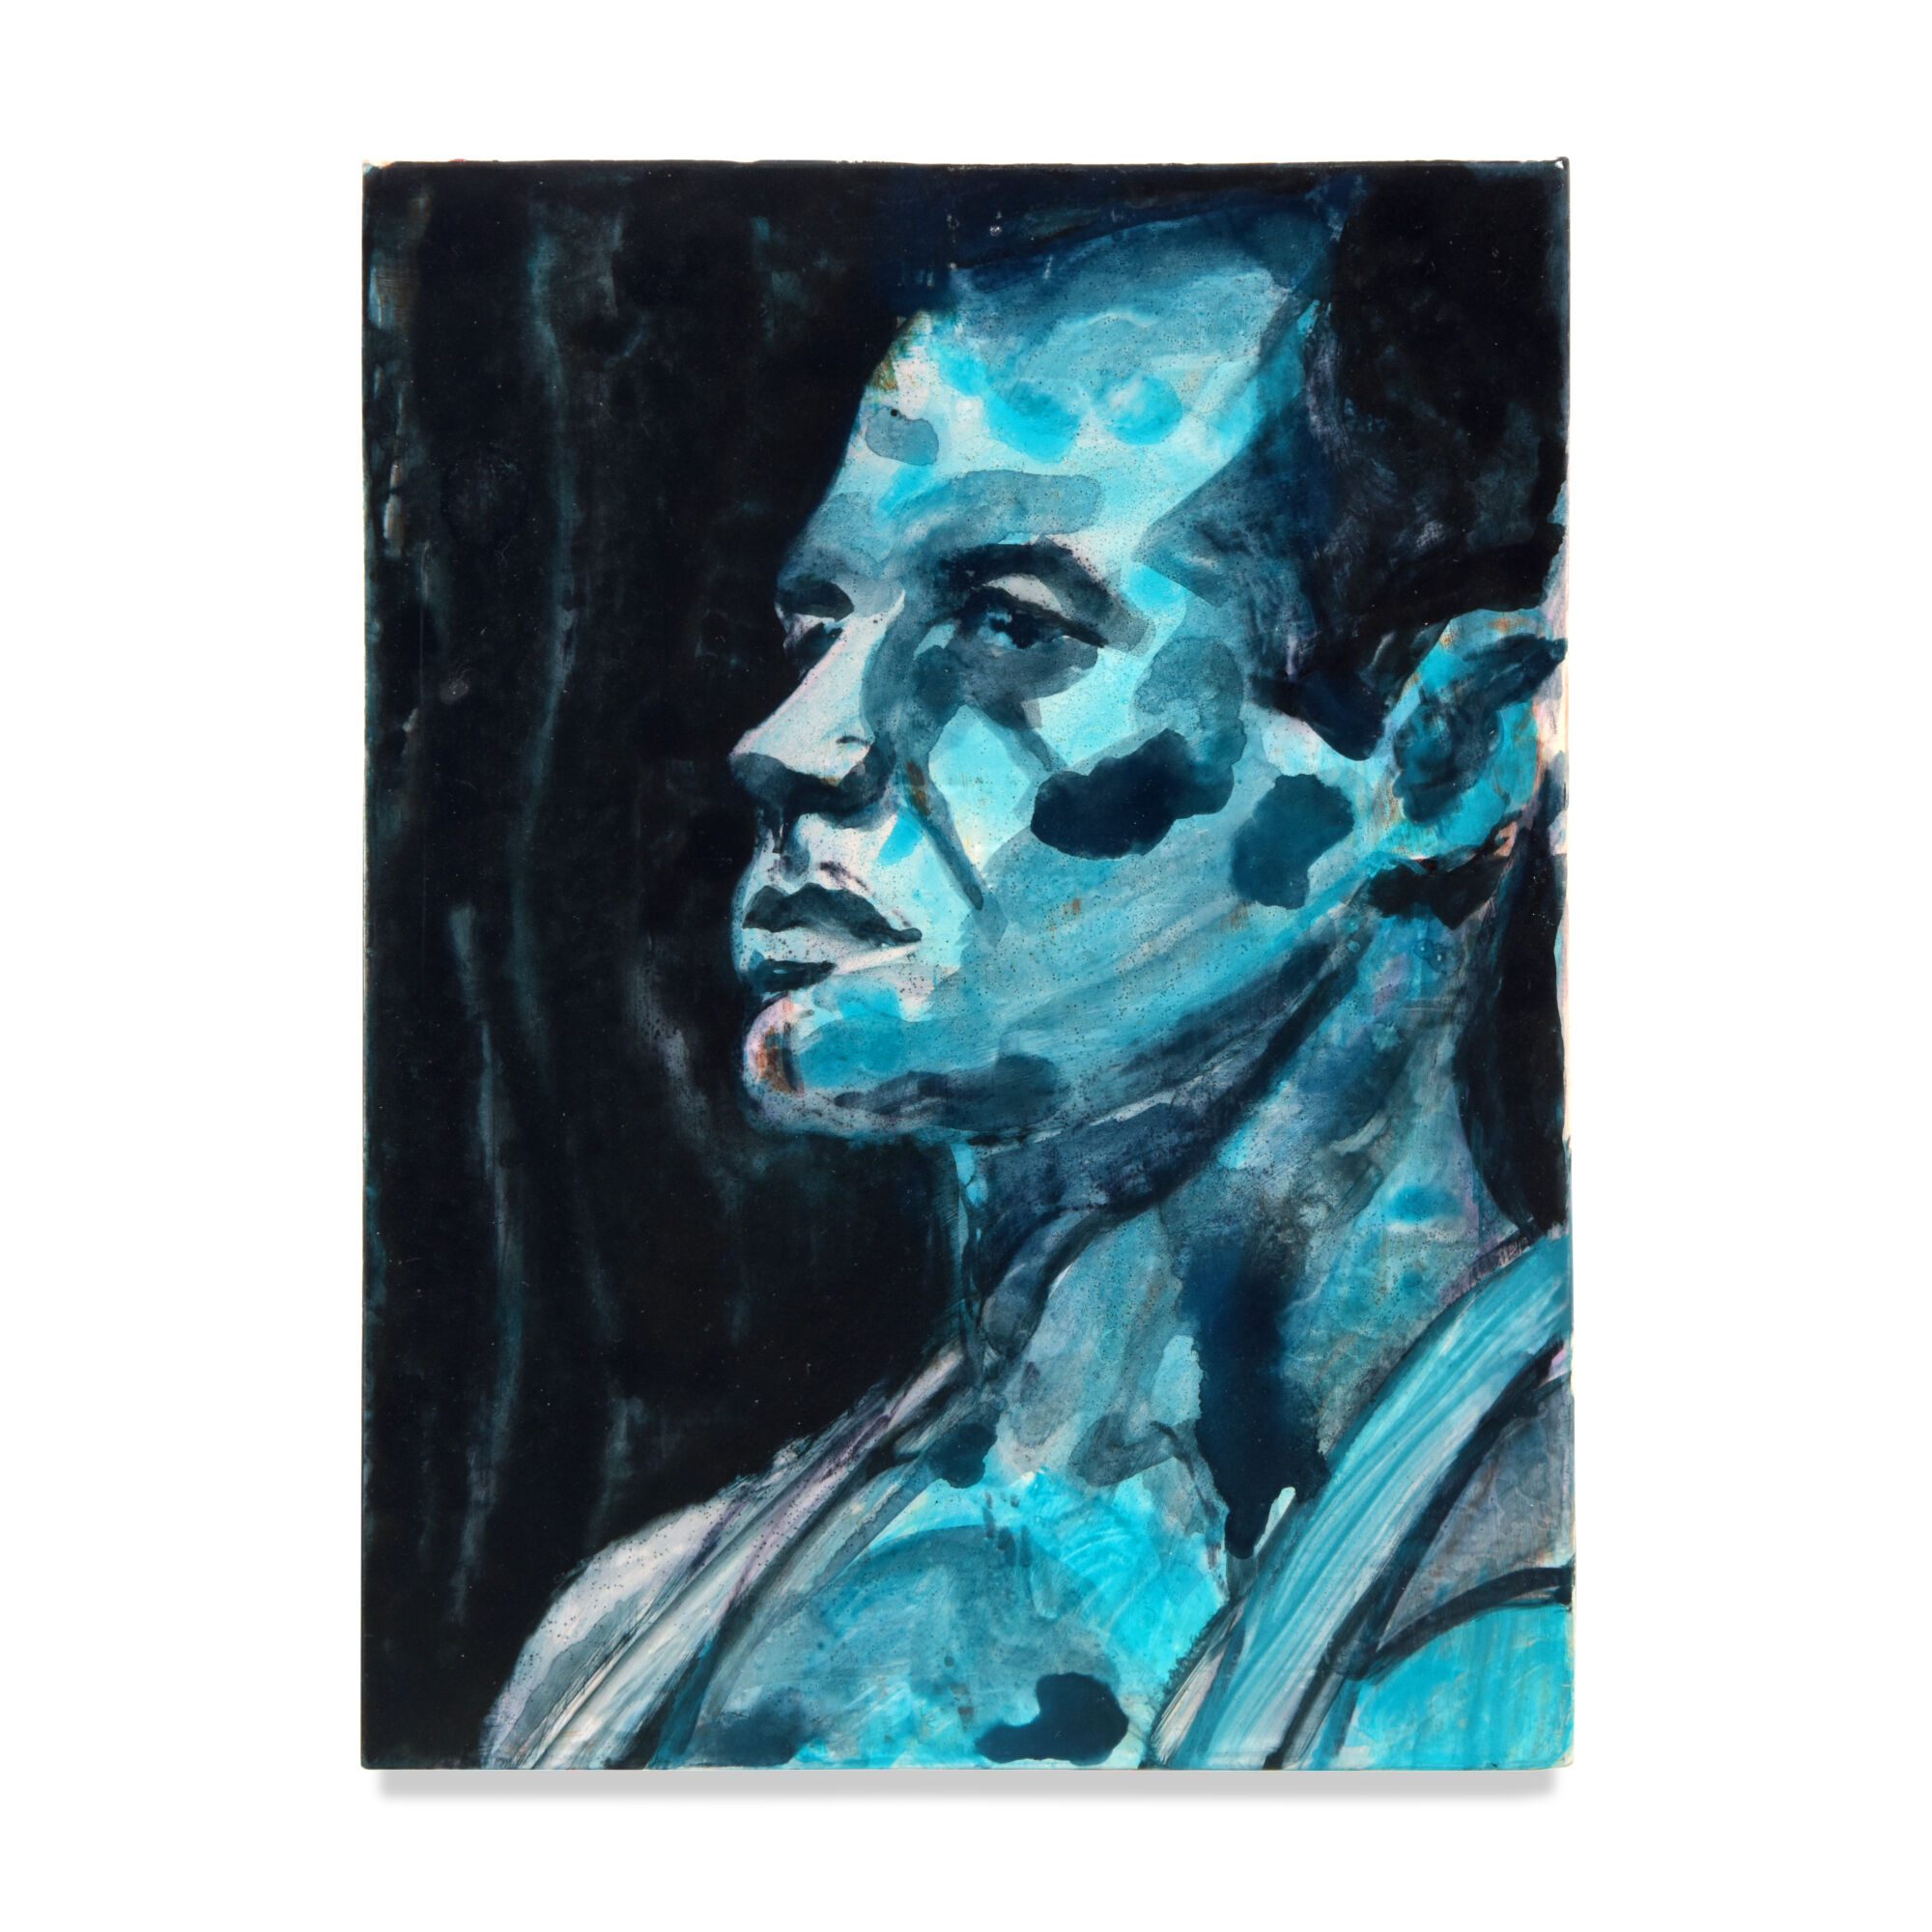 The Wick - Leon Pozniakow
Querelle, 2021
Watercolour on gesso panel 20 x 15 cm, 7 7/8 x 5 7/8 ins